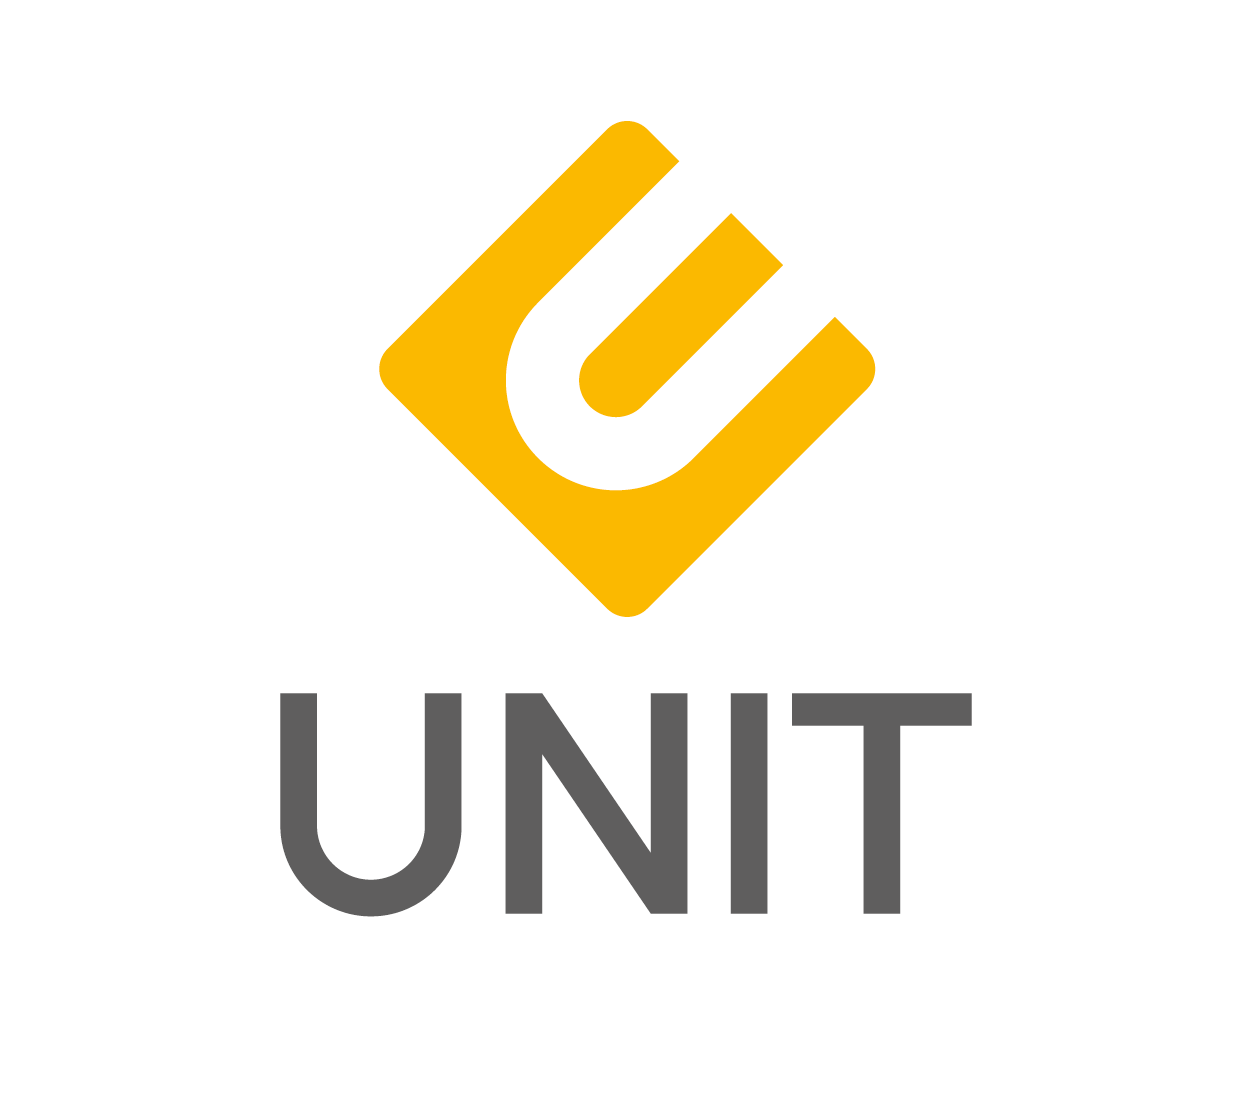 Unit Logo - File:UNIT-LOGO-Yellow-vertical.png - Wikimedia Commons